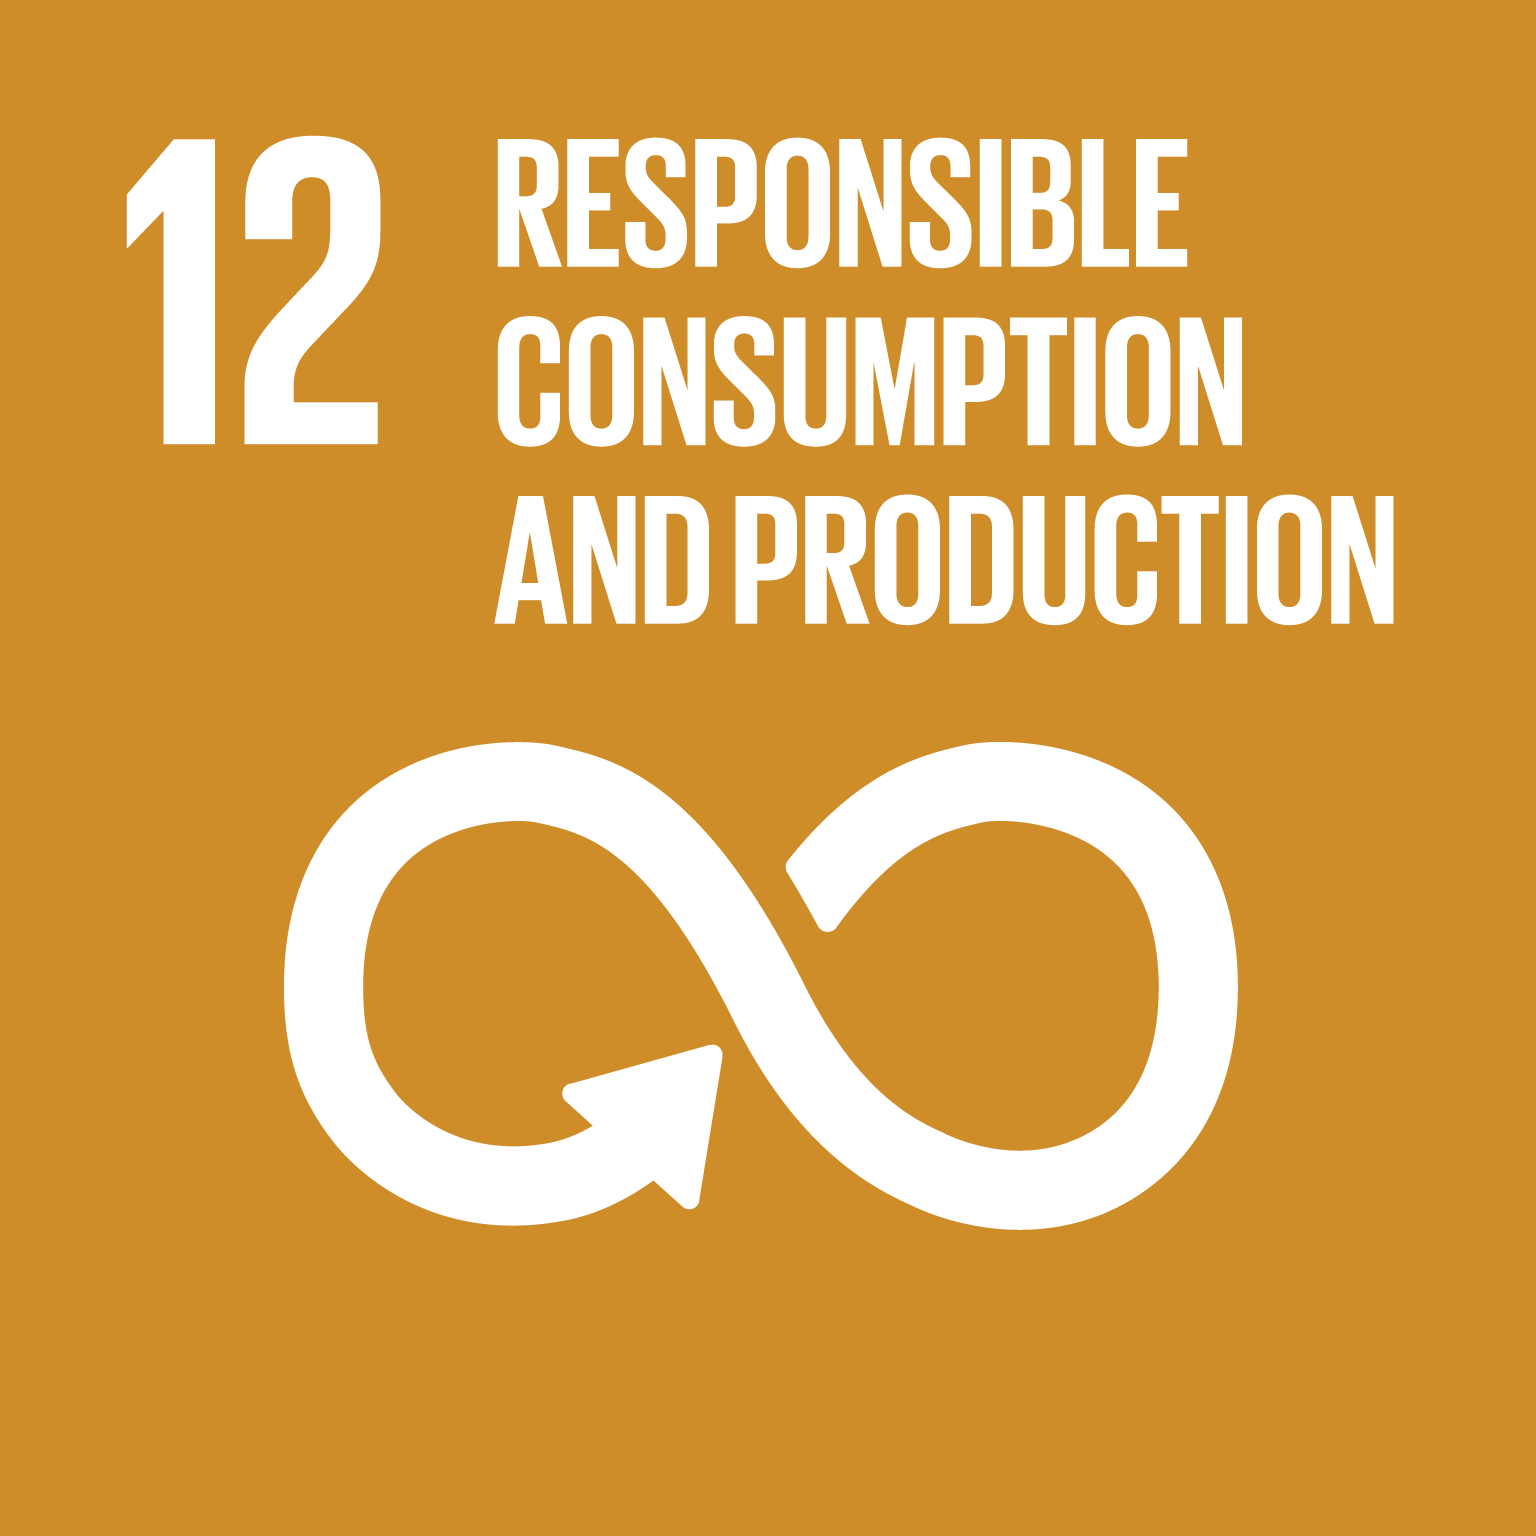 Sutainable Development Goal 12